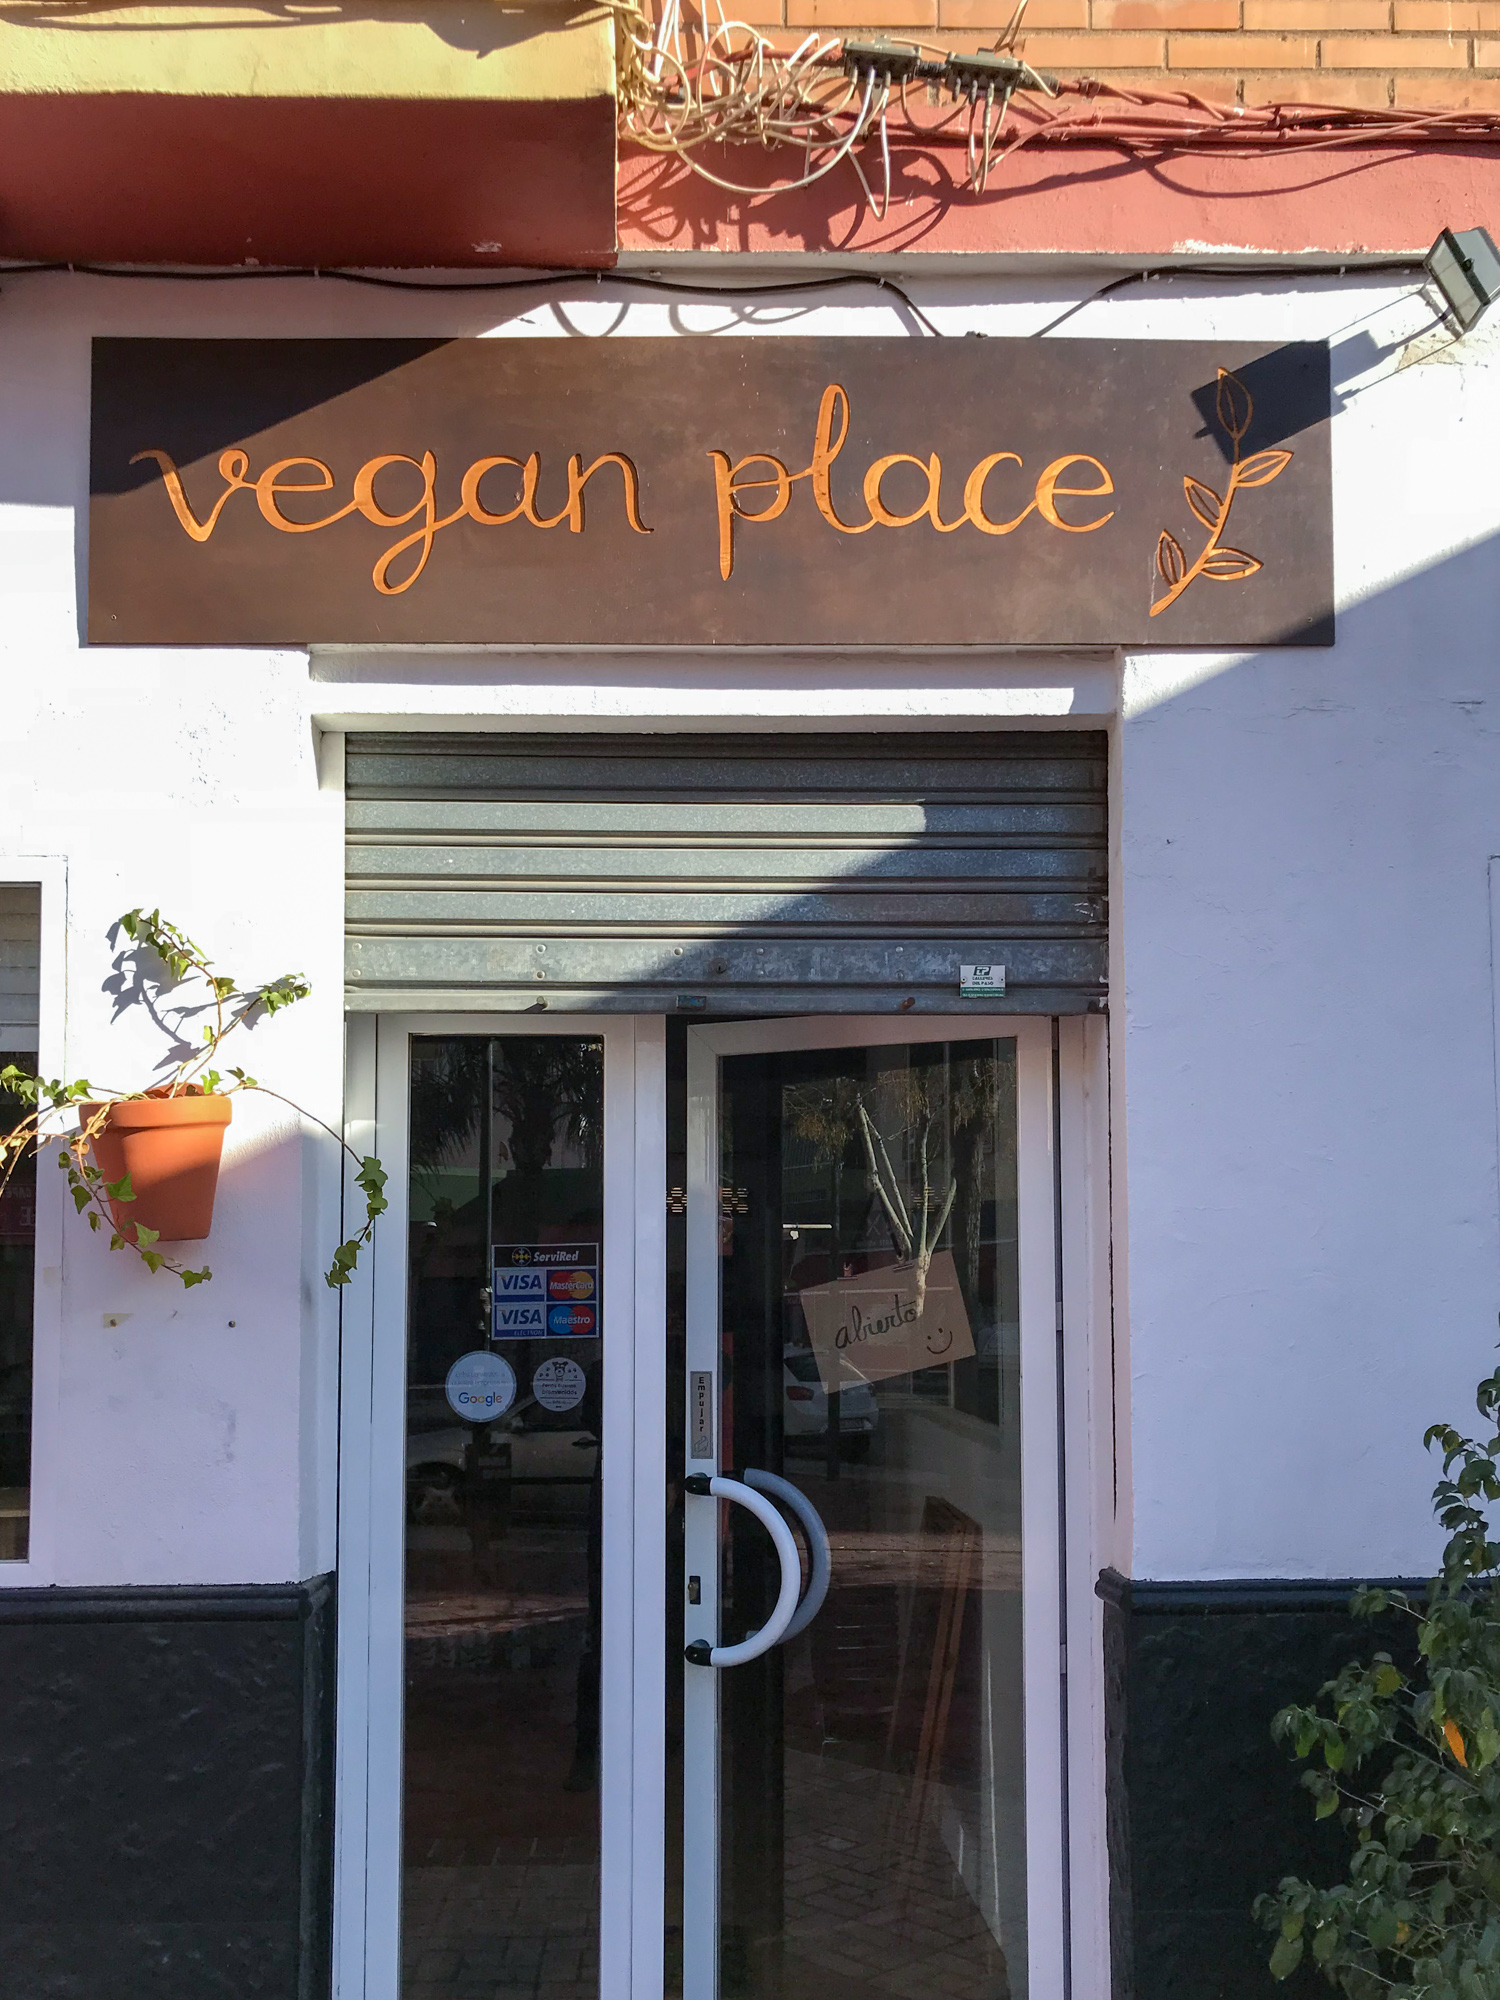 Vegan Place veganer Laden in Malaga, Spanien.